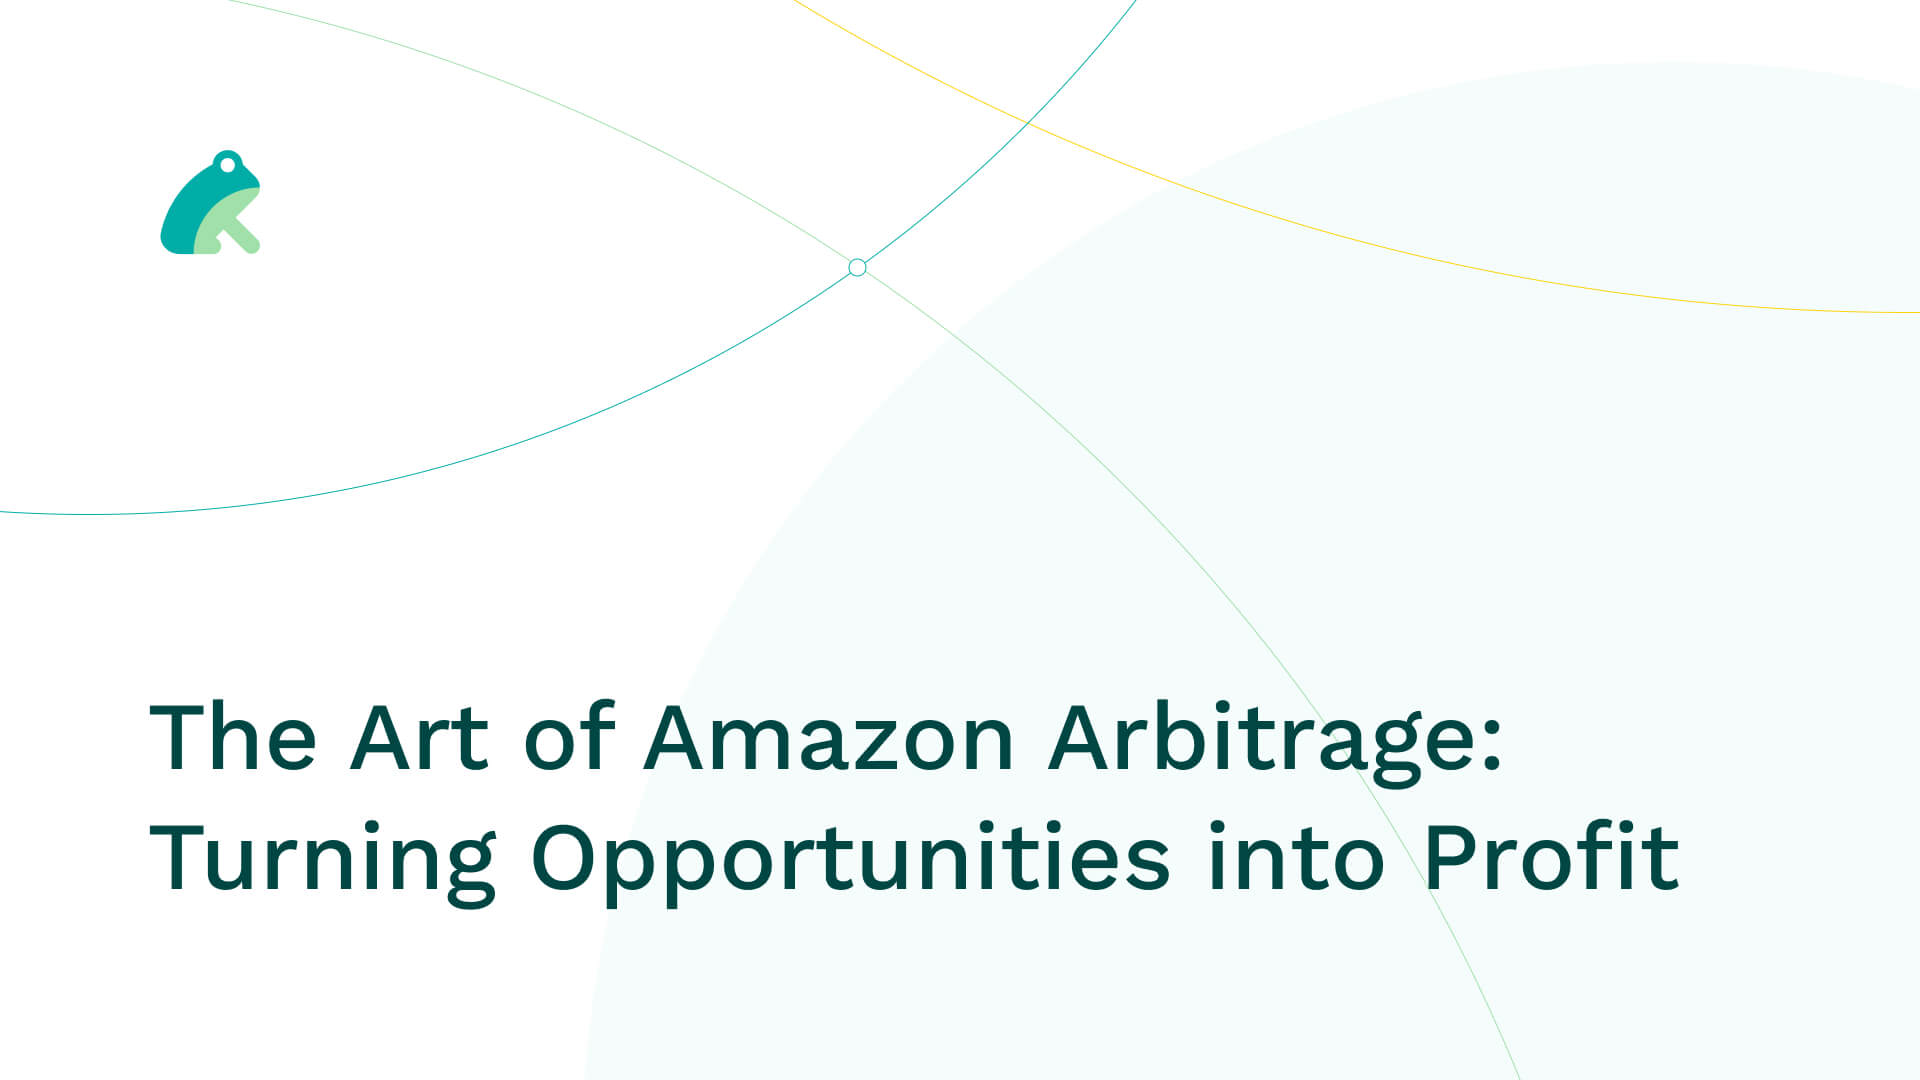 The Art of Amazon Arbitrage: Turning Opportunities into Profit